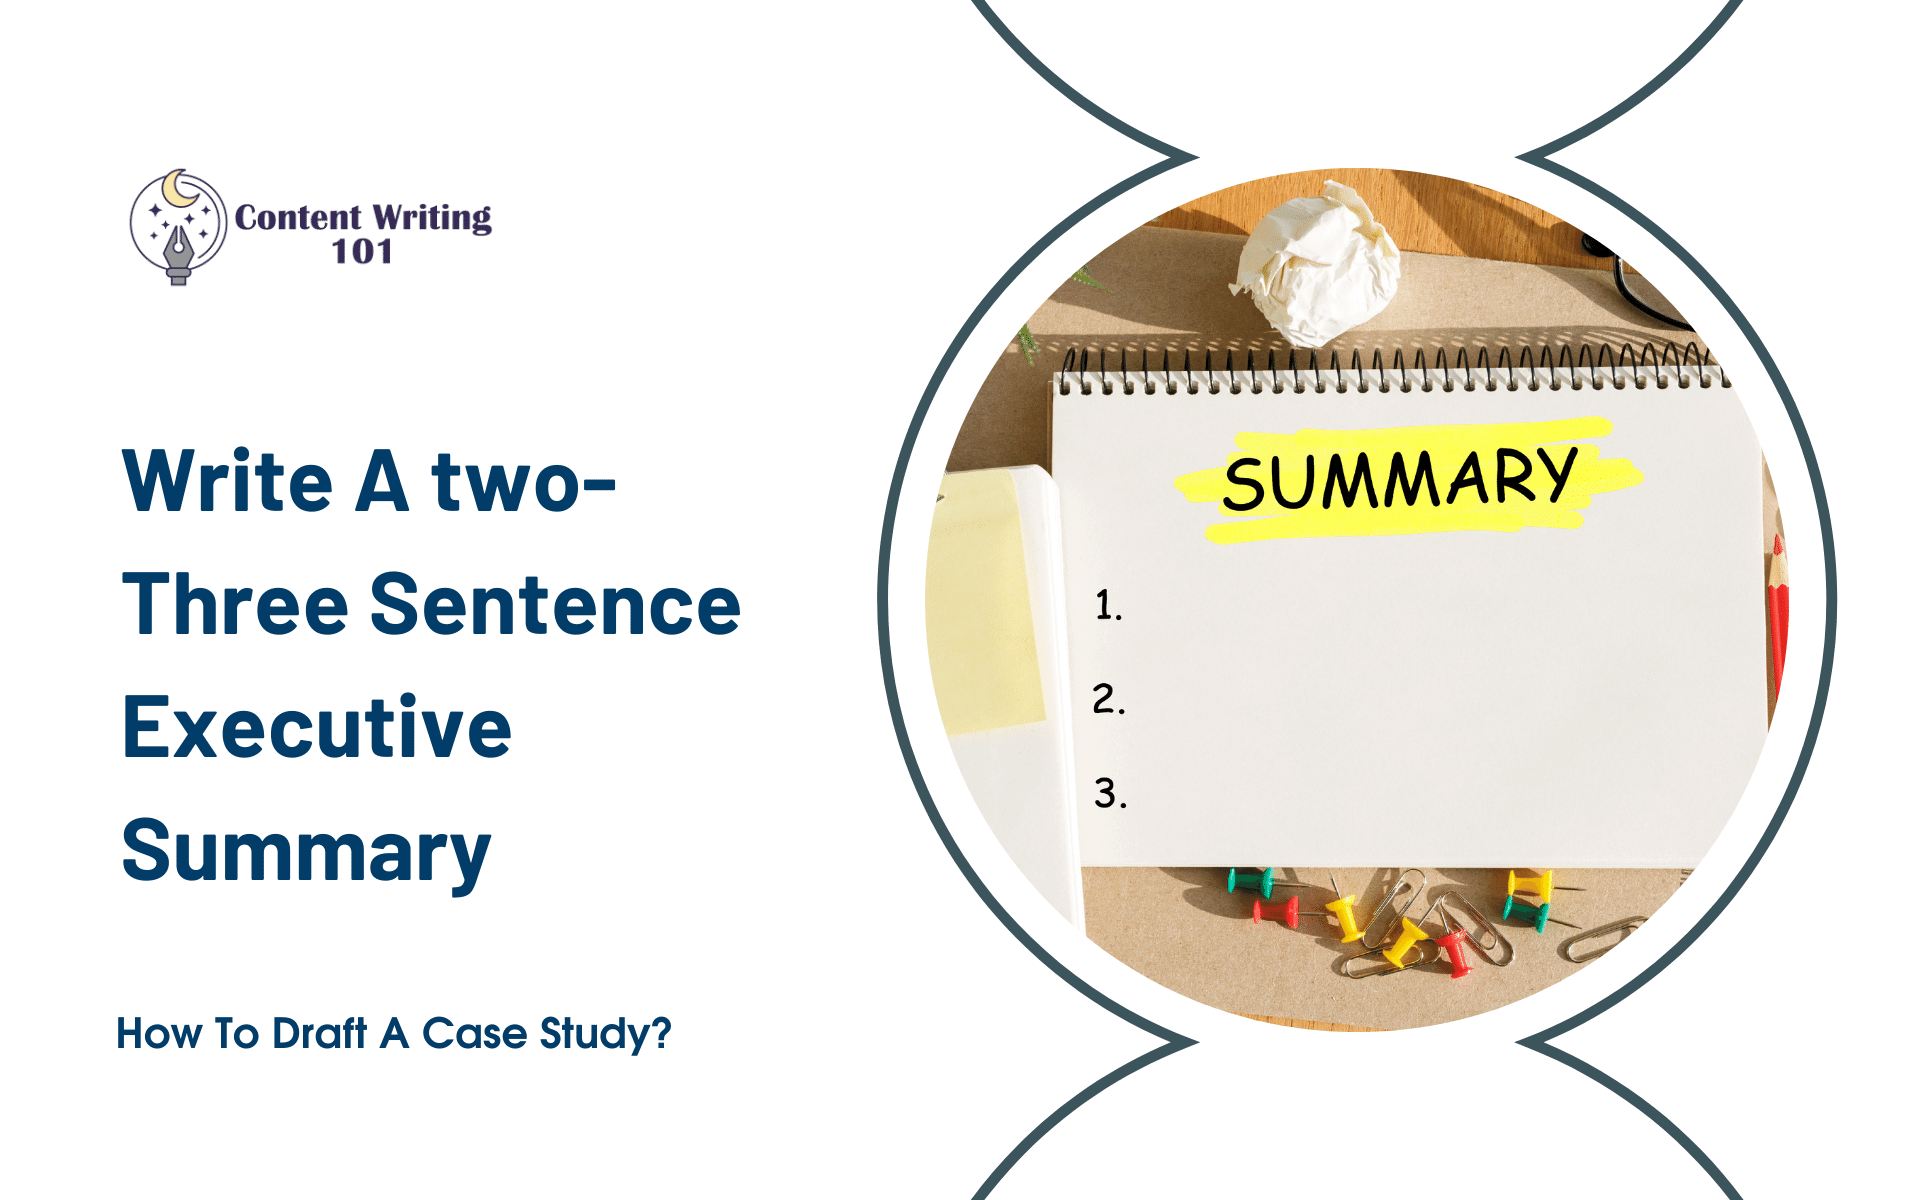 Write A two-Three Sentence Executive Summary 